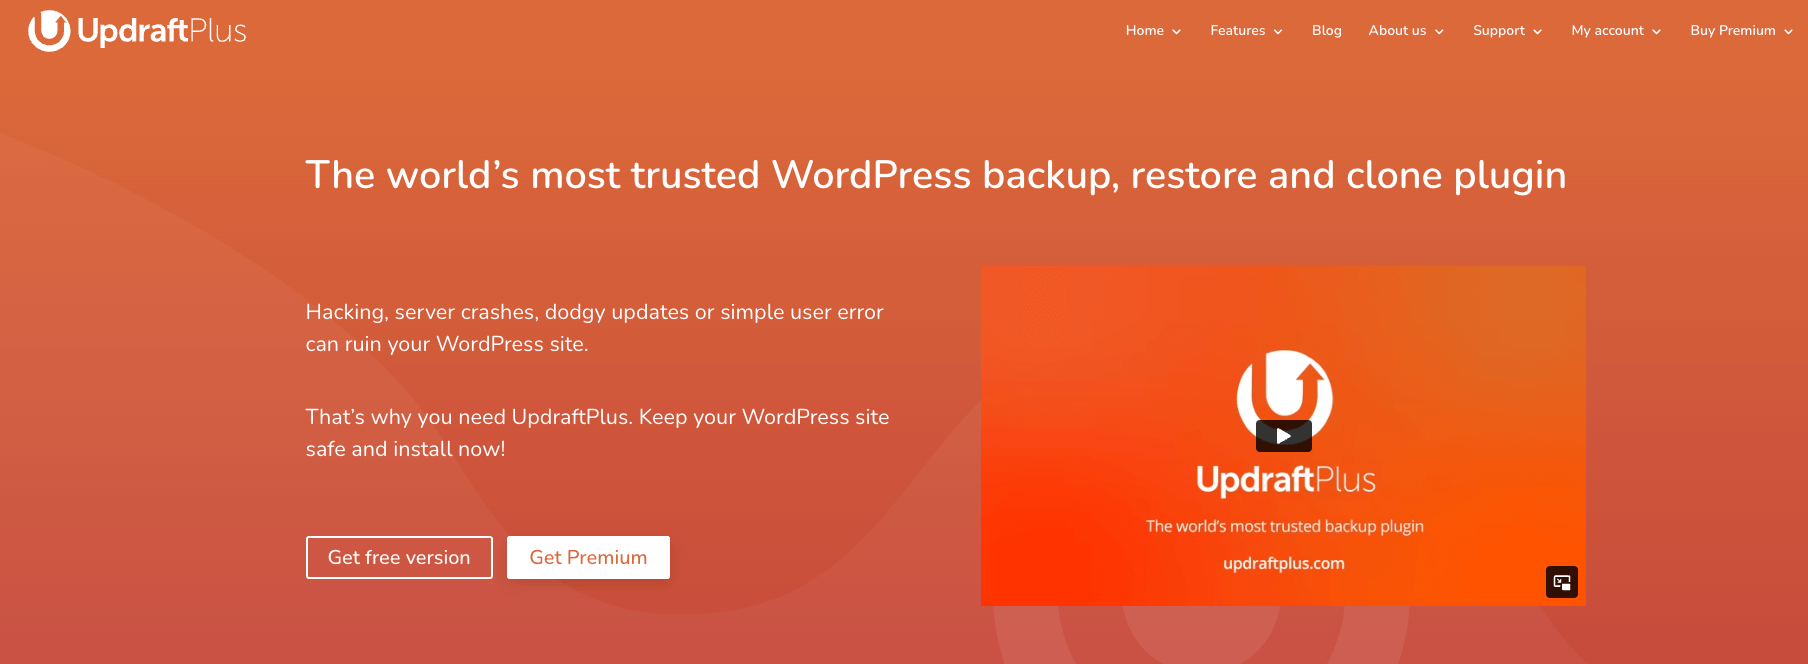 WordPress Backup Plugins Updraft Plus